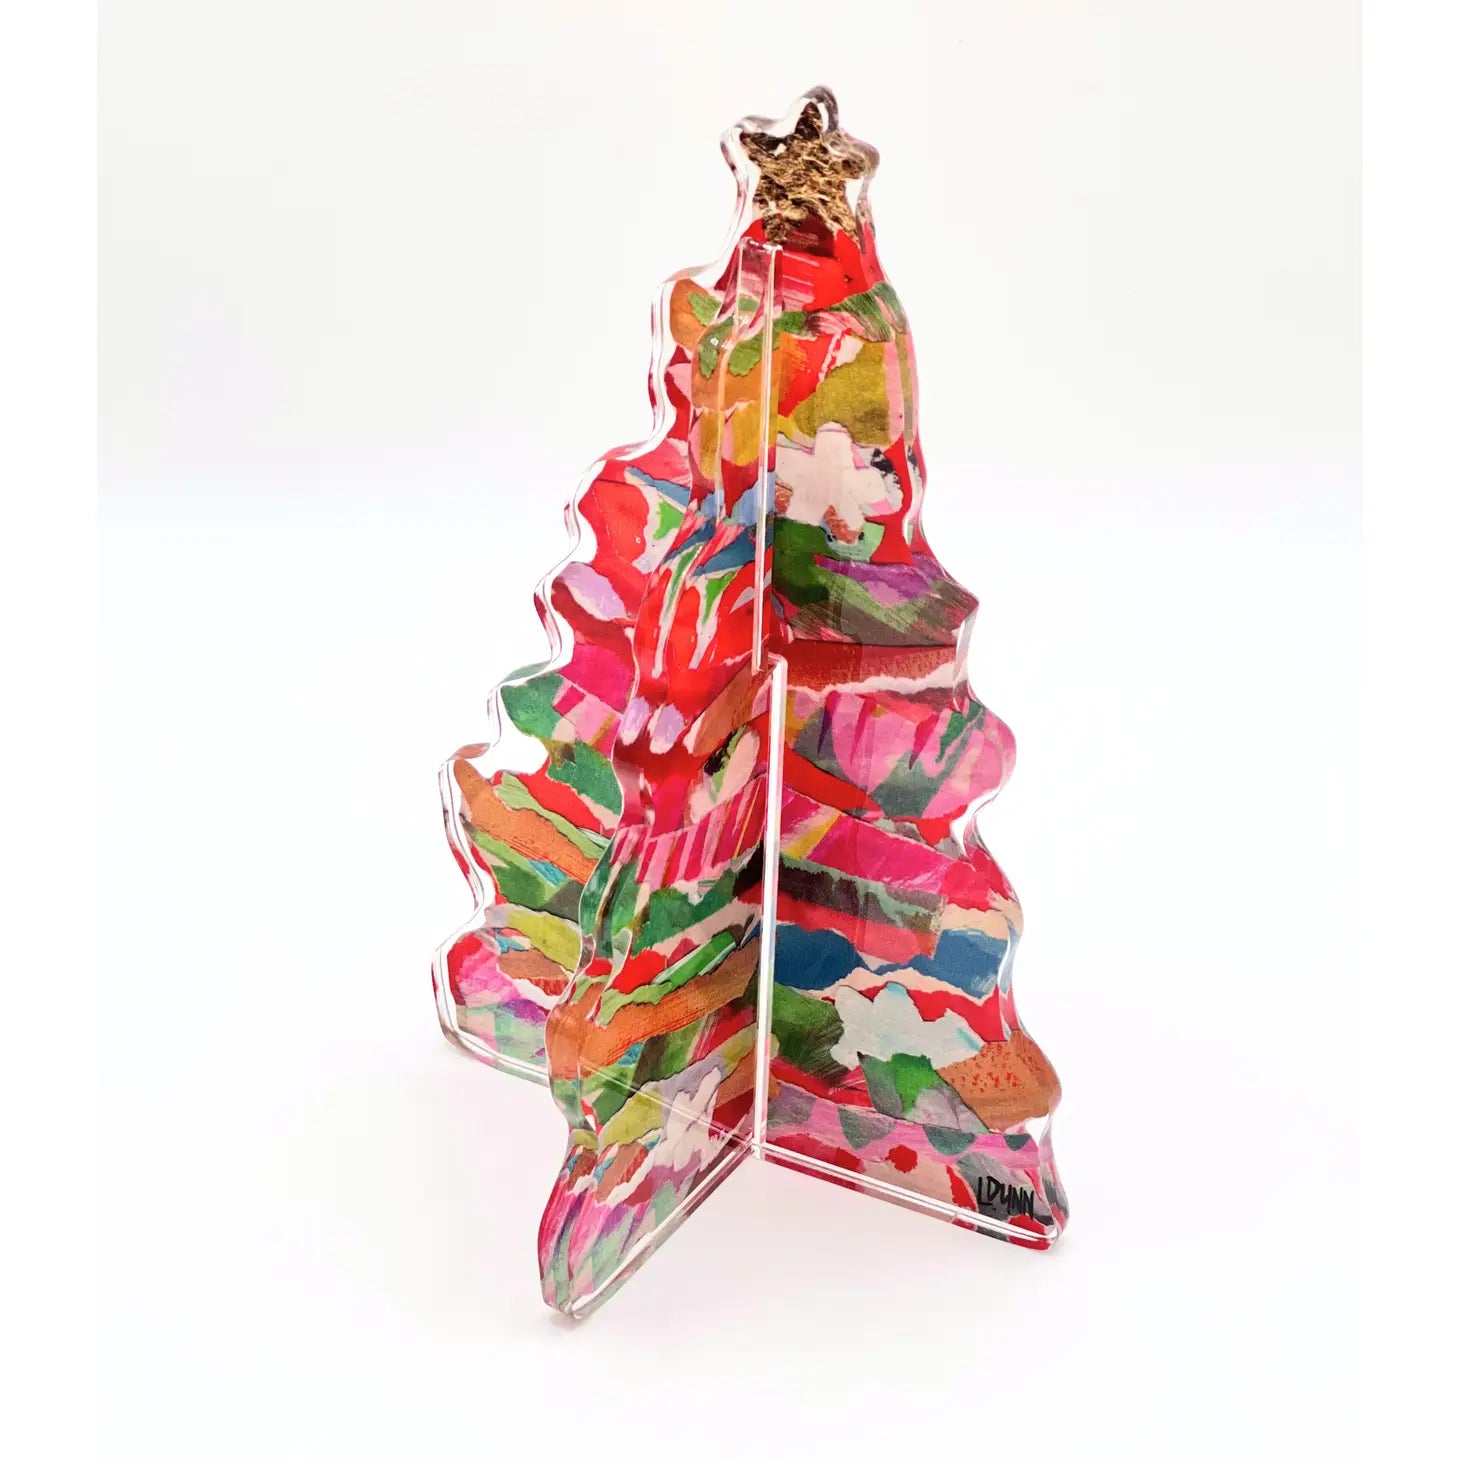 3-D Adorned Christmas Tree Collection | Lauren Dunn